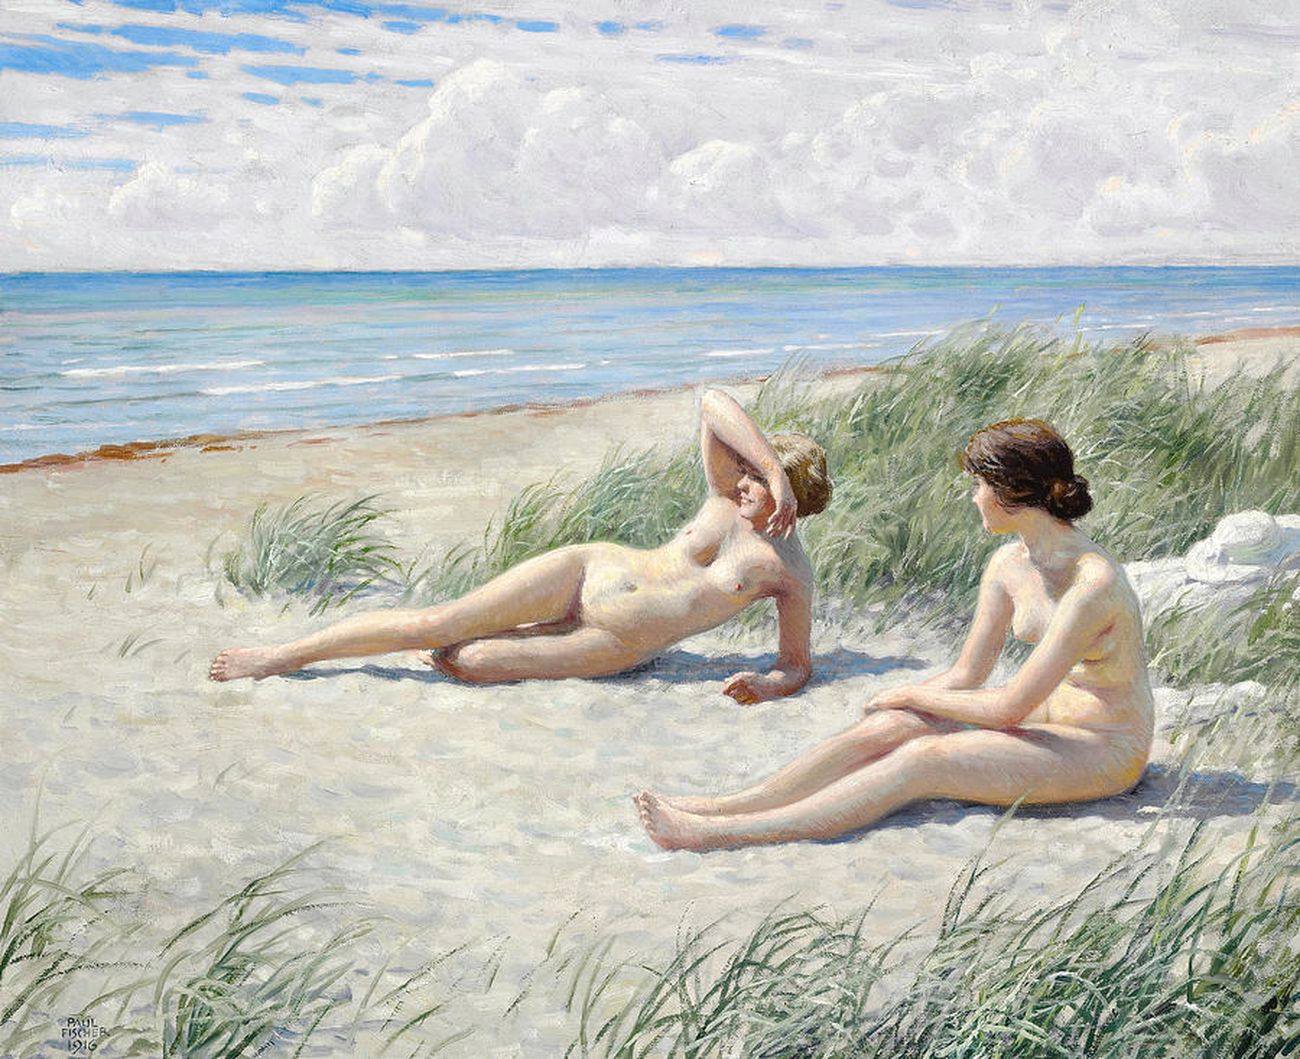 1300x1059, 239 Kb / Paul Gustav Fischer (Danish 1860-1934), "Two young women lying on Hornbek beach enjoying the sun", 1916, Oil on canvas, 60 x 72 cm, Private collection